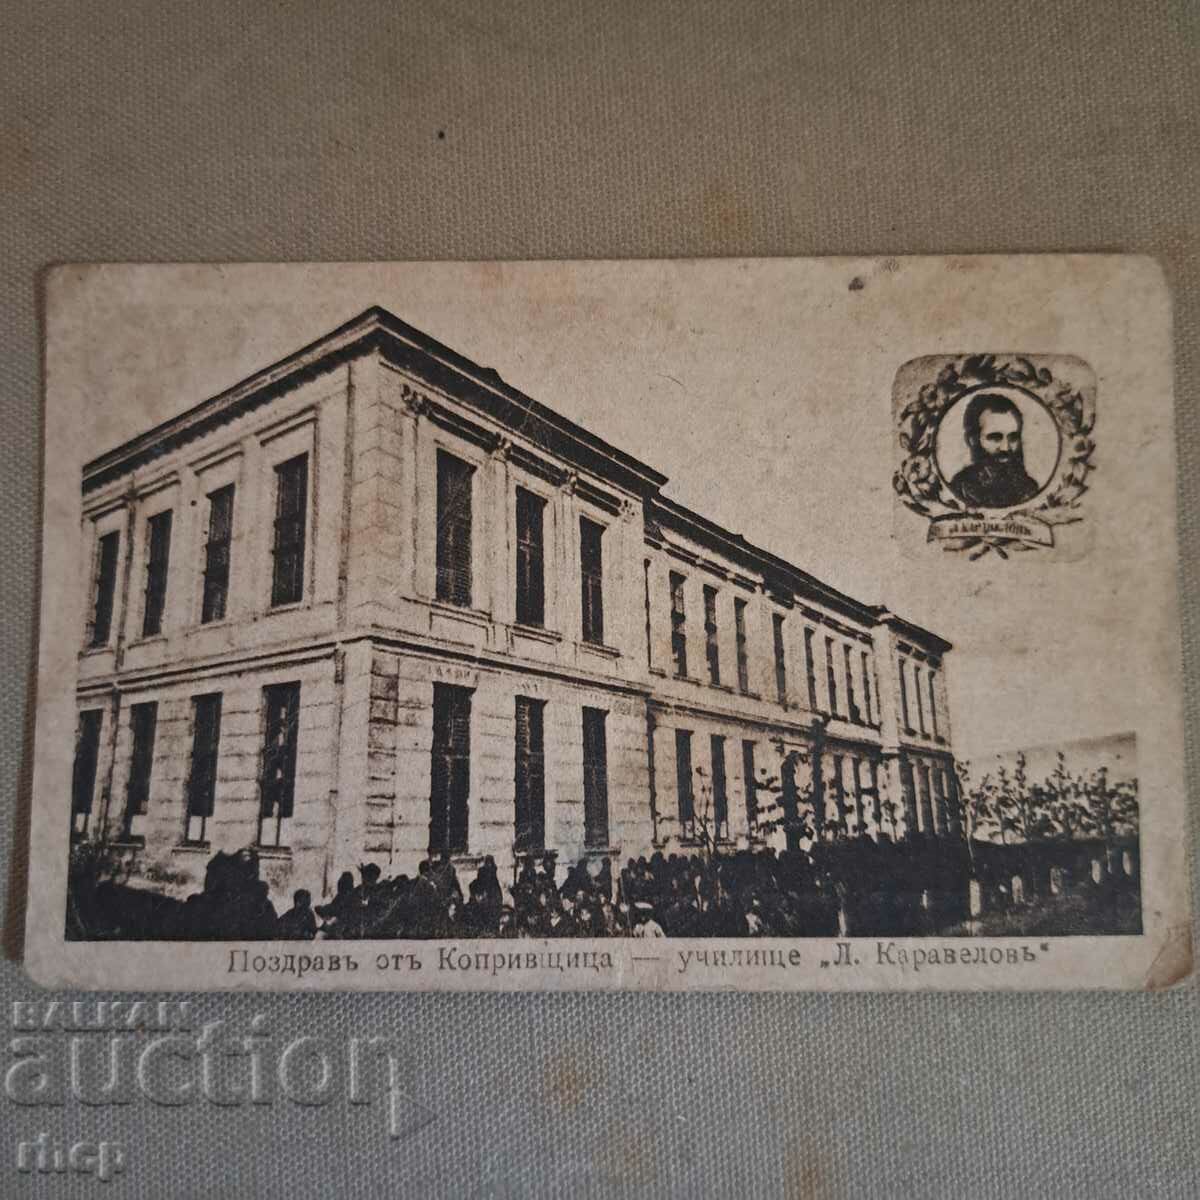 Koprivshtitsa Karavelov School 1930s old postcard